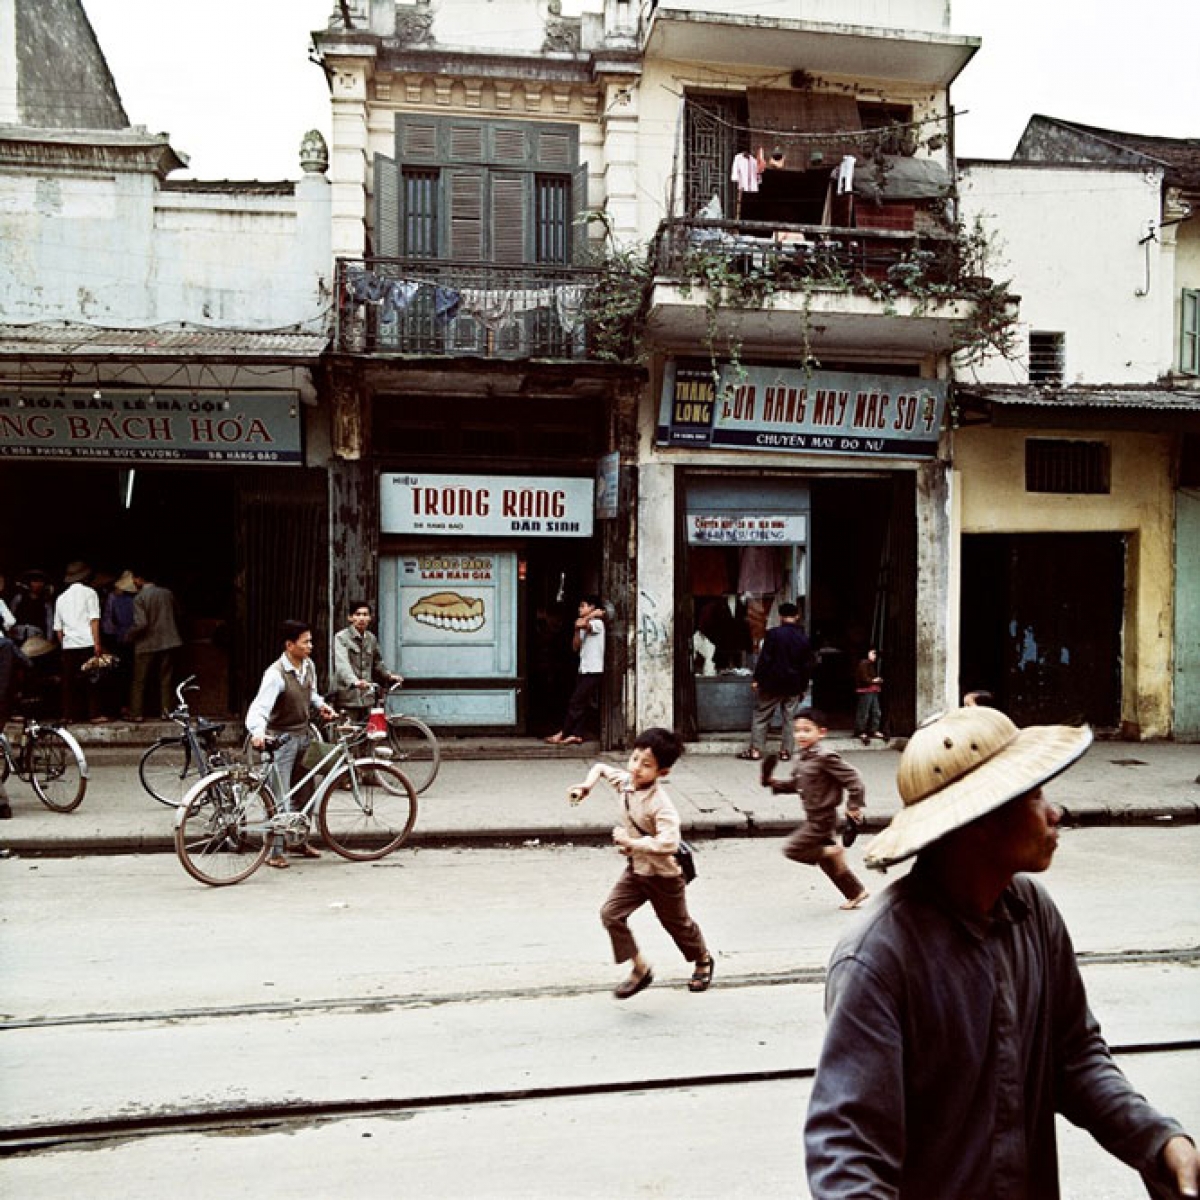 An image taken on Hang Dao street in 1975